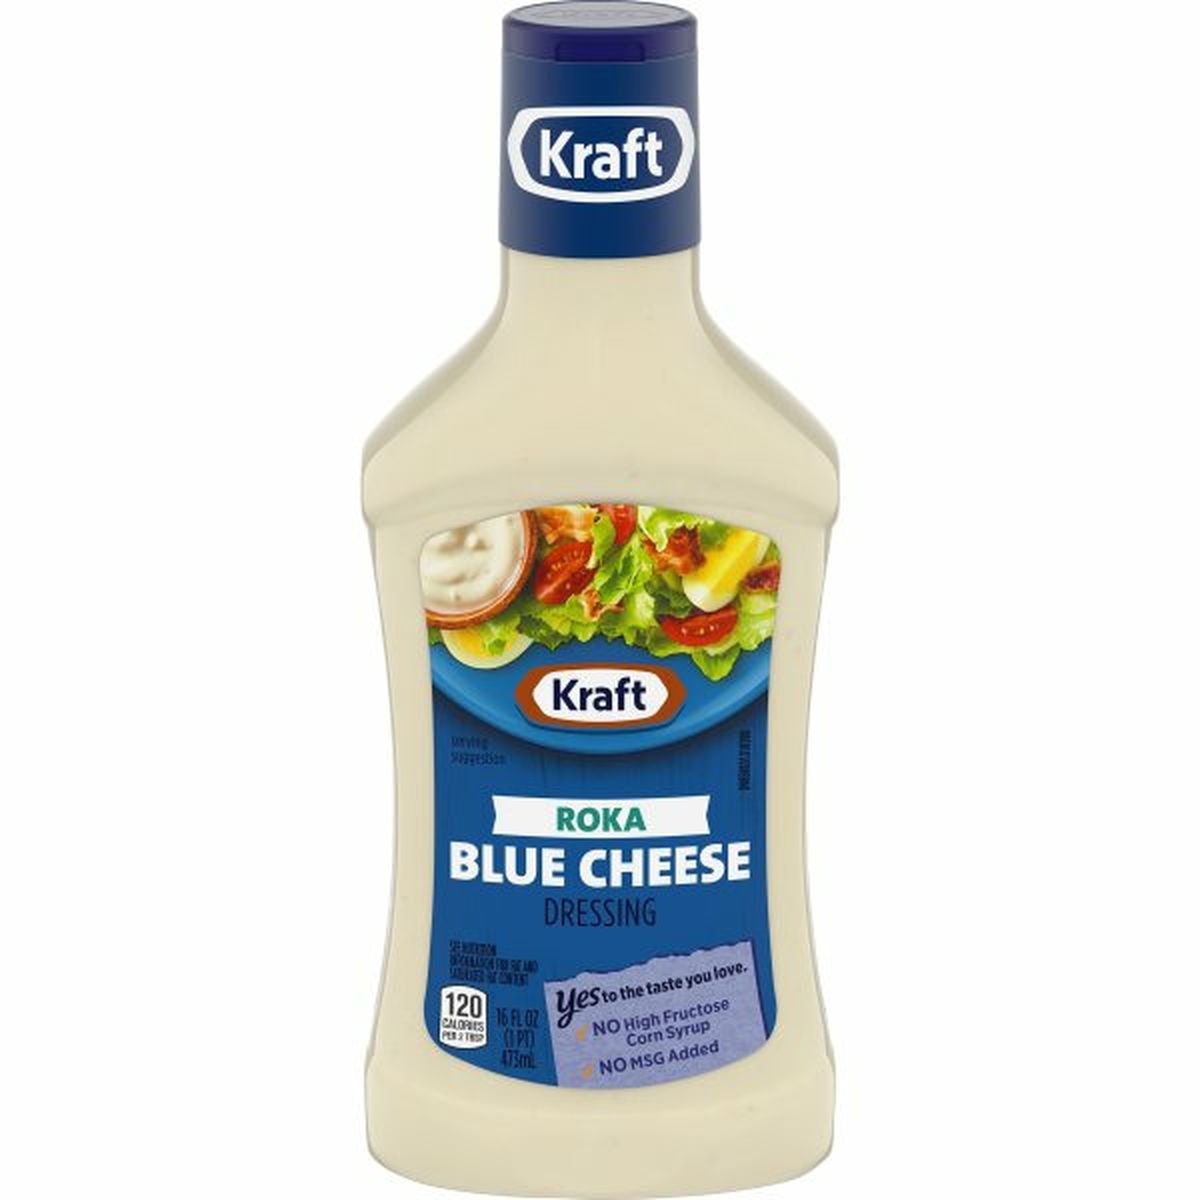 Calories in Kraft Roka Blue Cheese Dressing